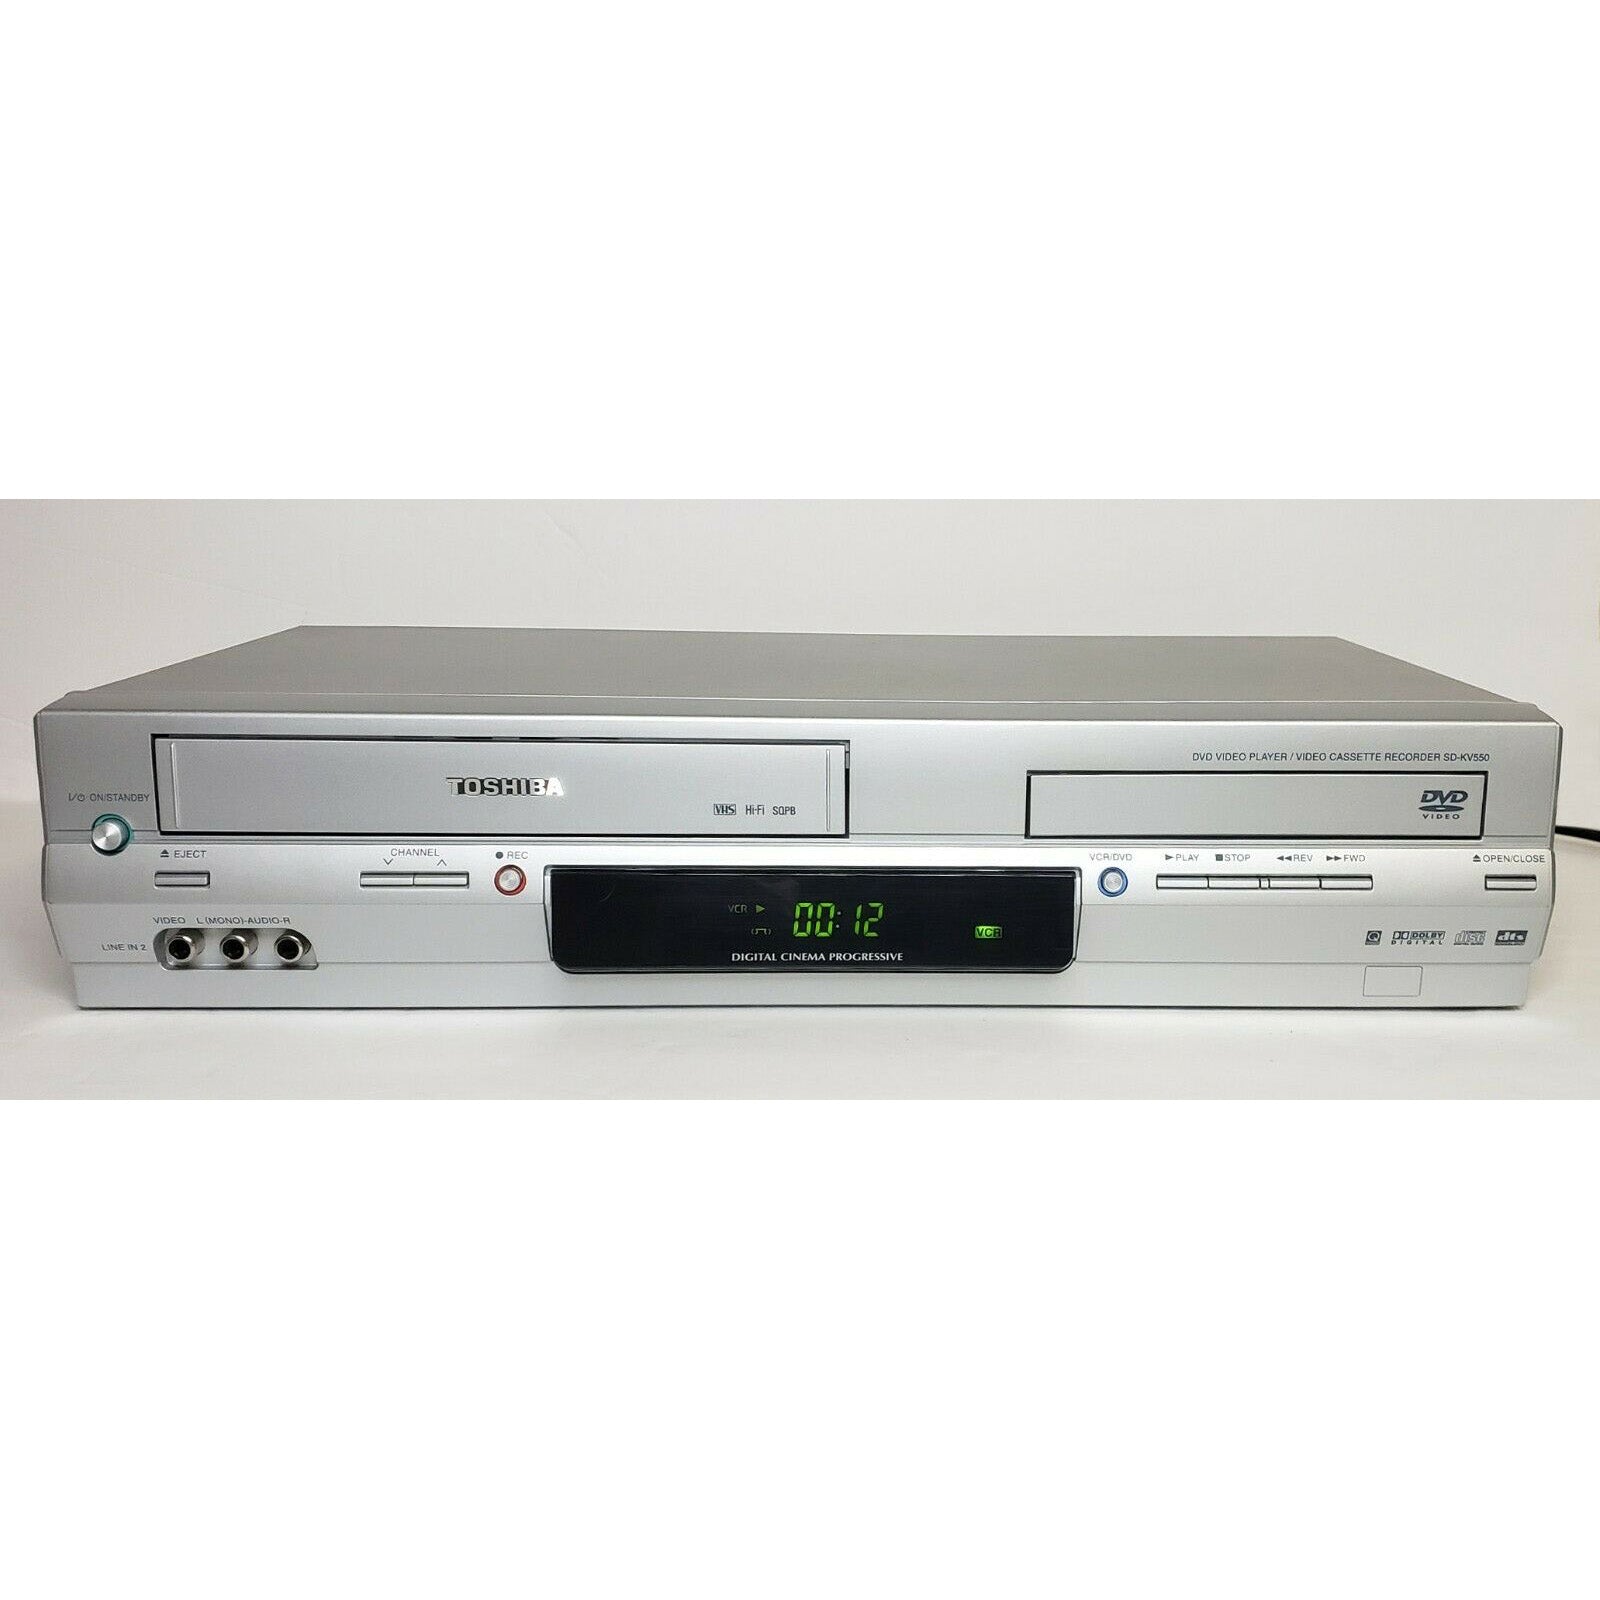 Toshiba SD-KV550SU VCR/DVD Player Combo - Front